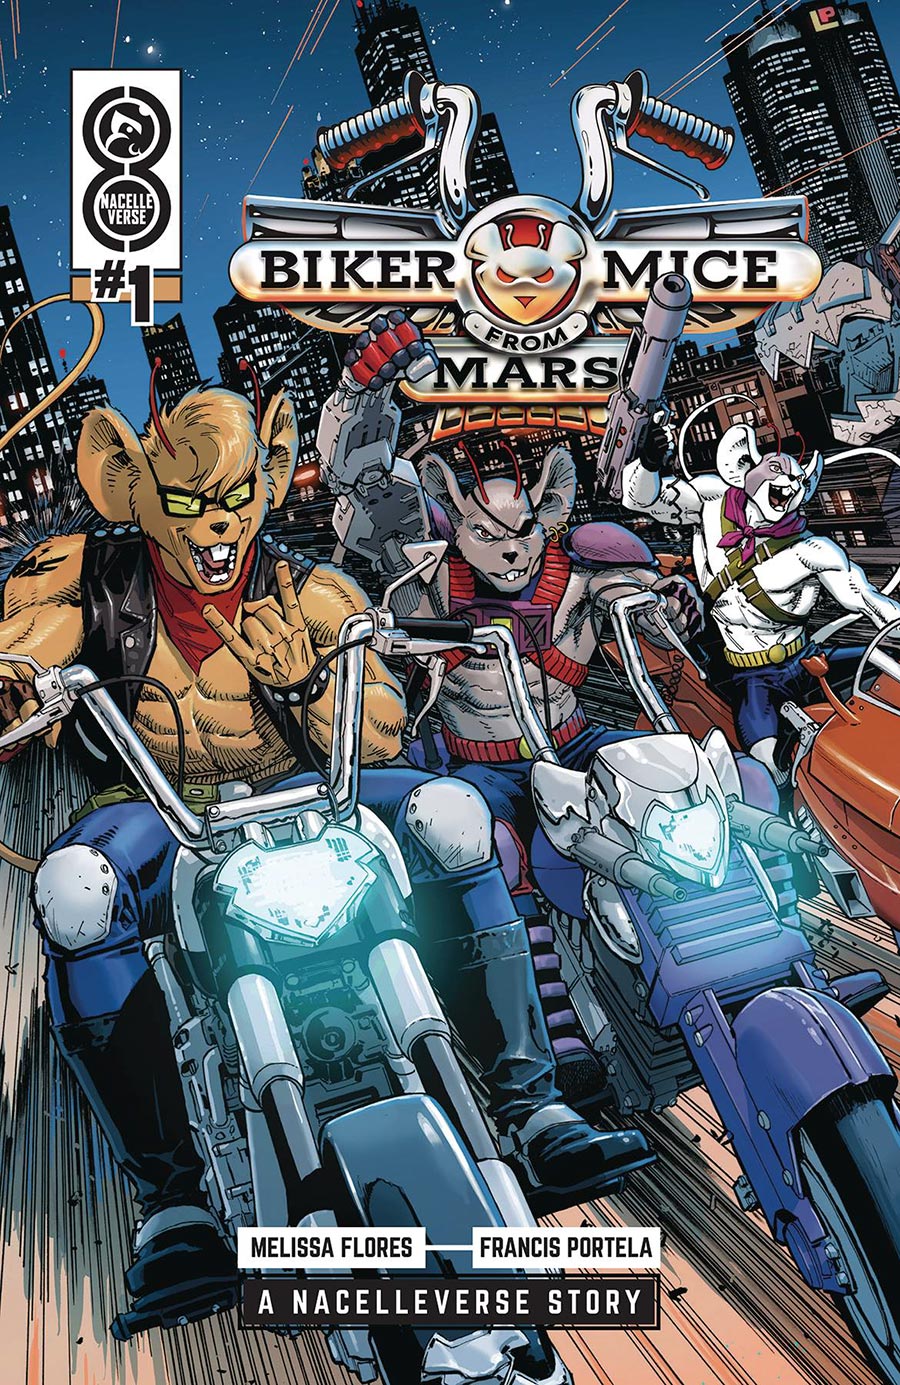 Biker Mice From Mars Vol 2 #1 Cover A Regular Dustin Weaver Cover